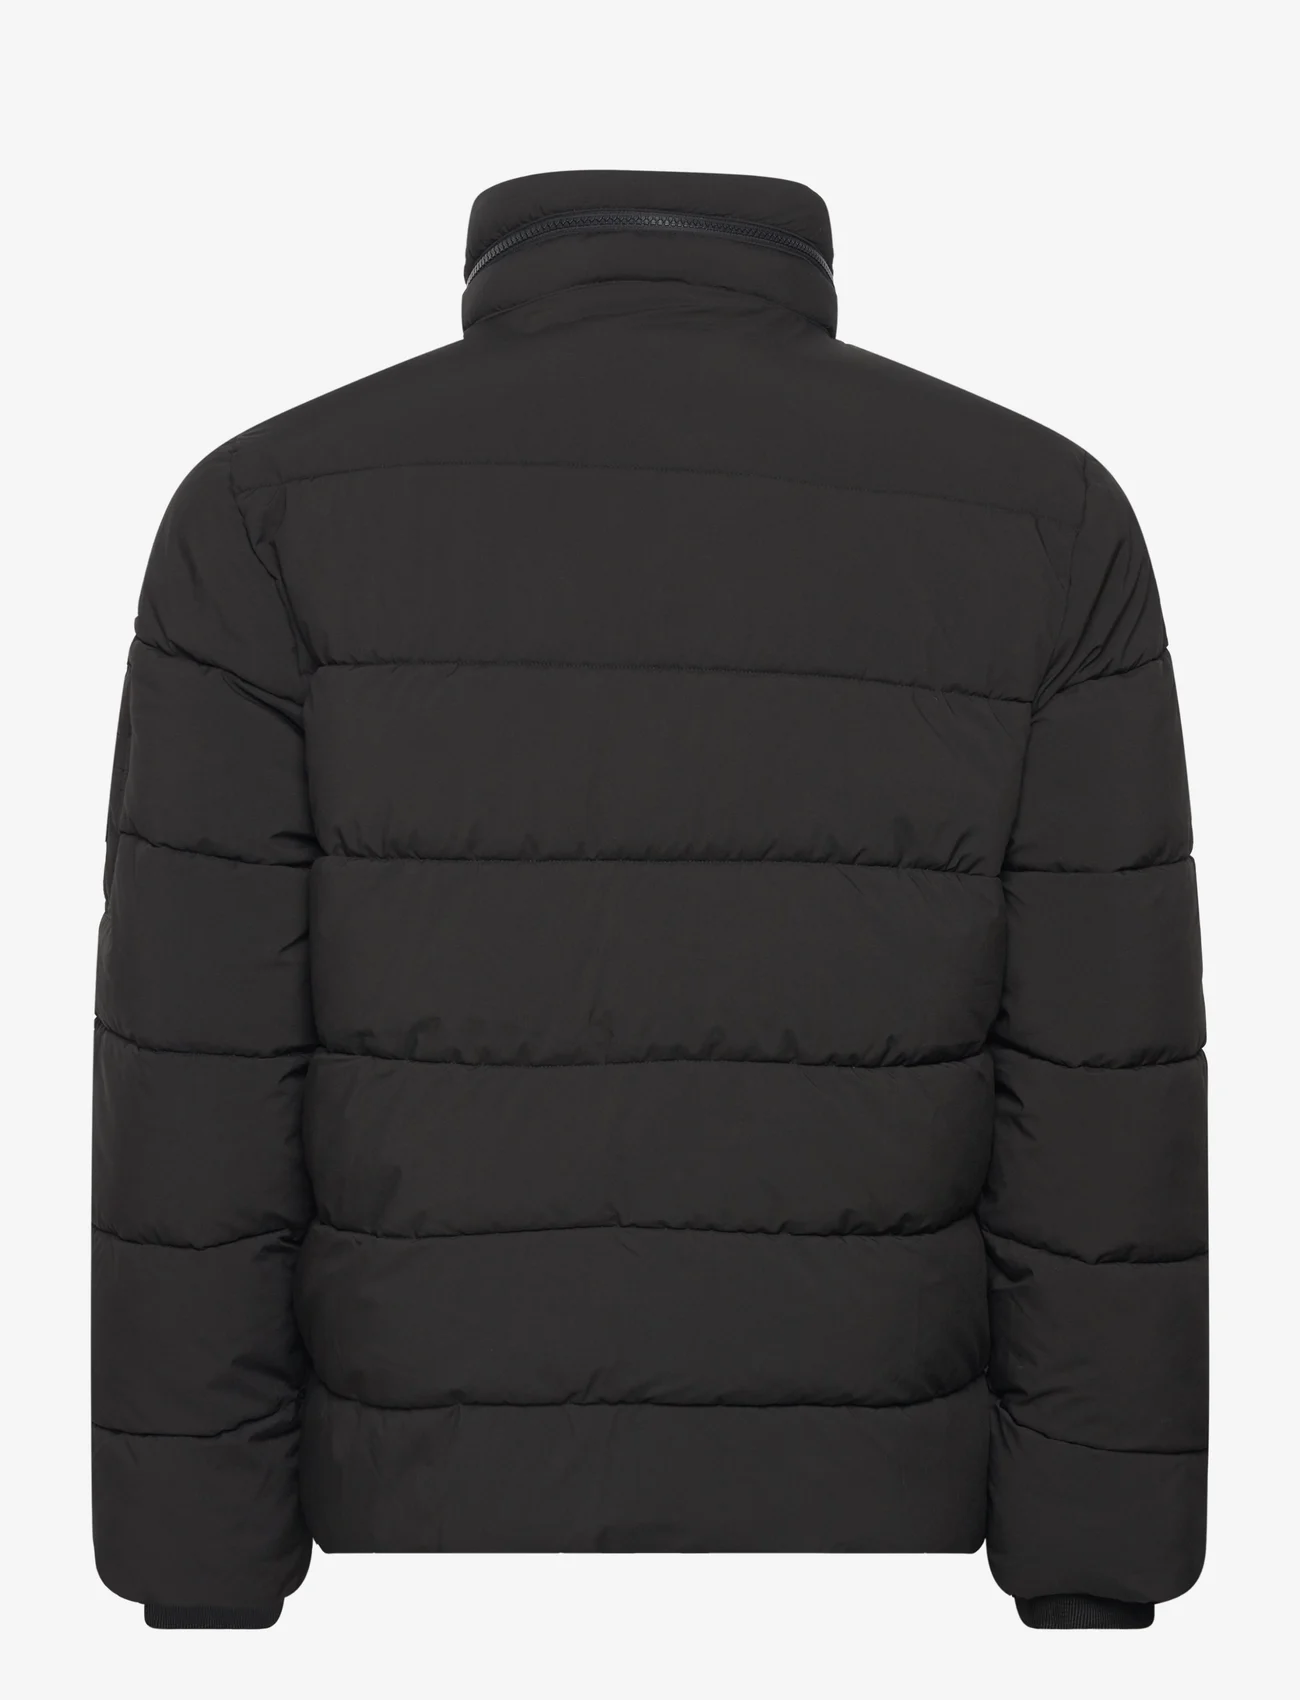 Tom Tailor - puffer jacket - winterjacken - black - 1